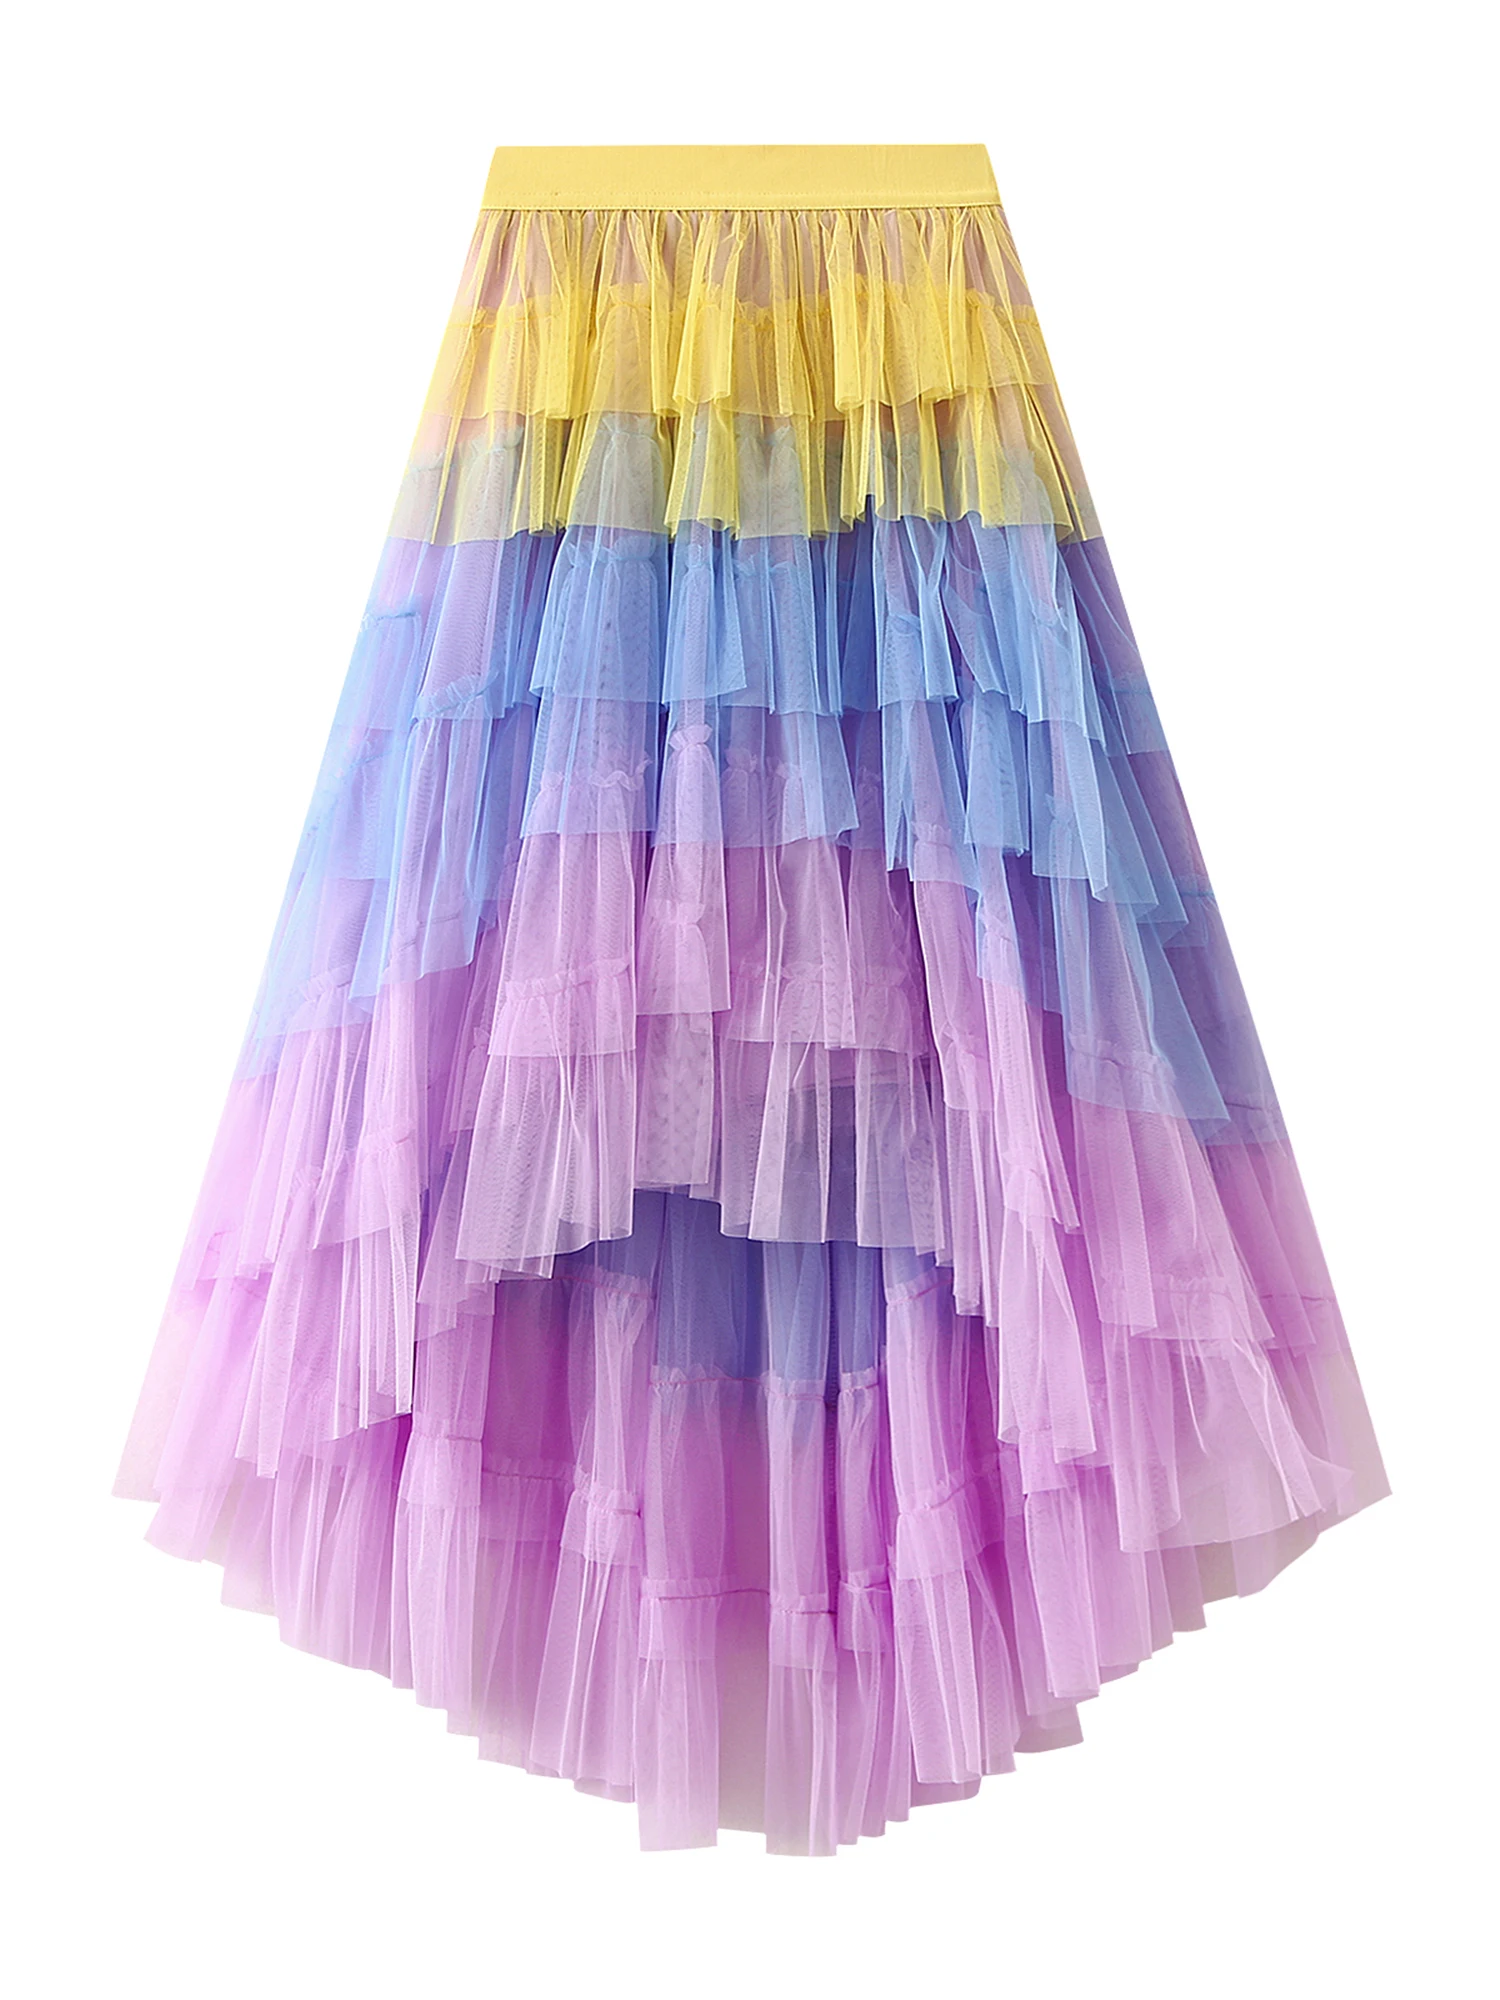 

Women s Pleated Maxi Skirt Gradient Ombre High Waist A-Line Long Skirt with Elastic Waistband